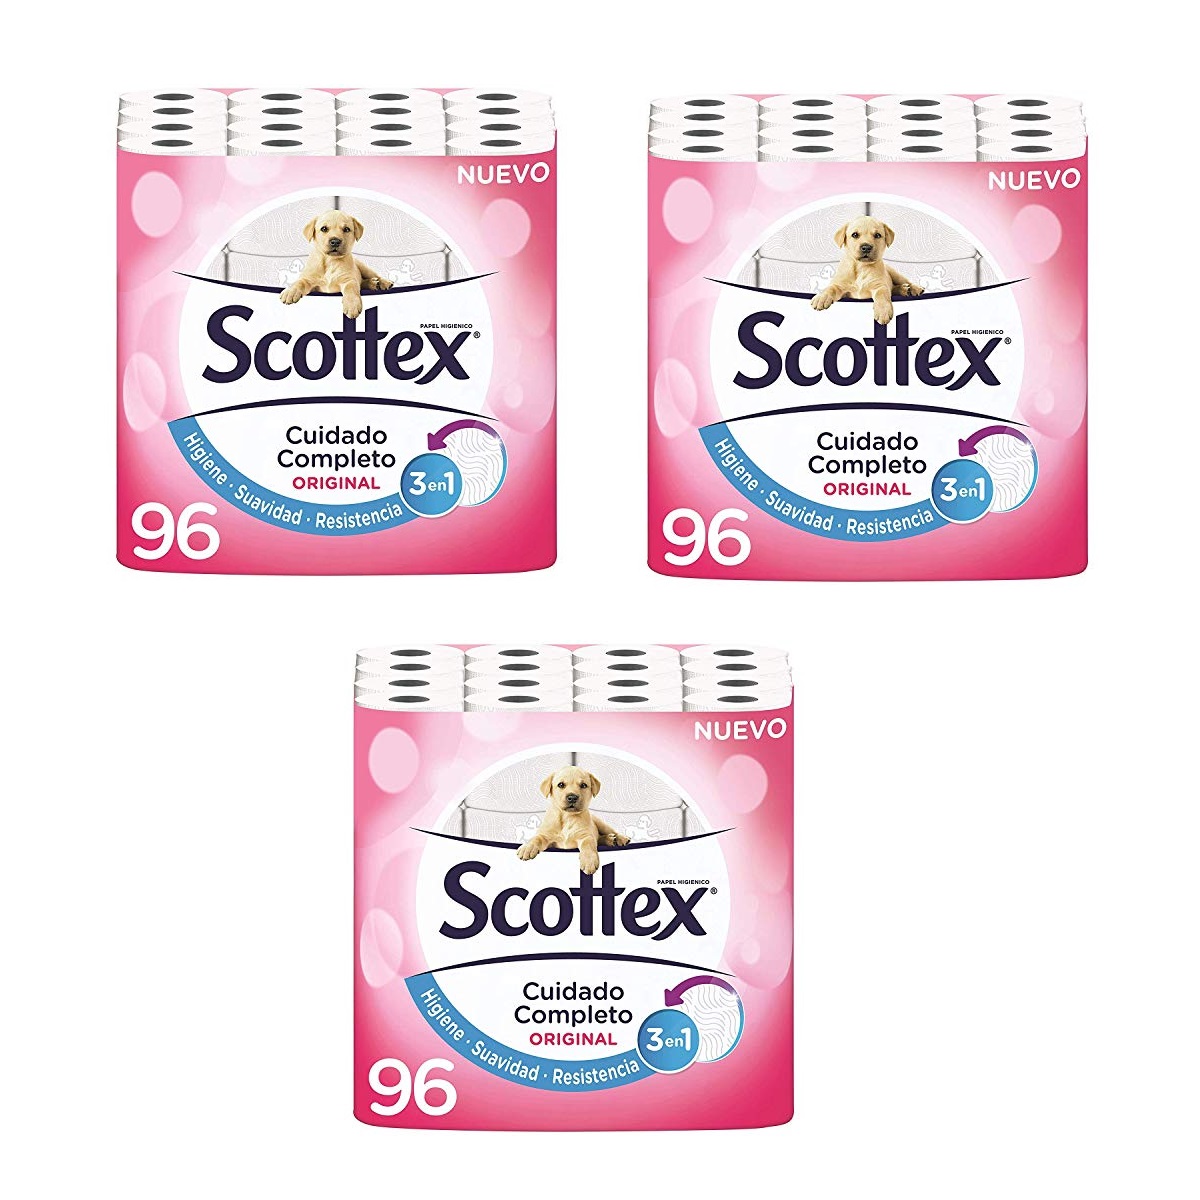 Papel higiénico original SCOTTEX, paquete 32 rollos